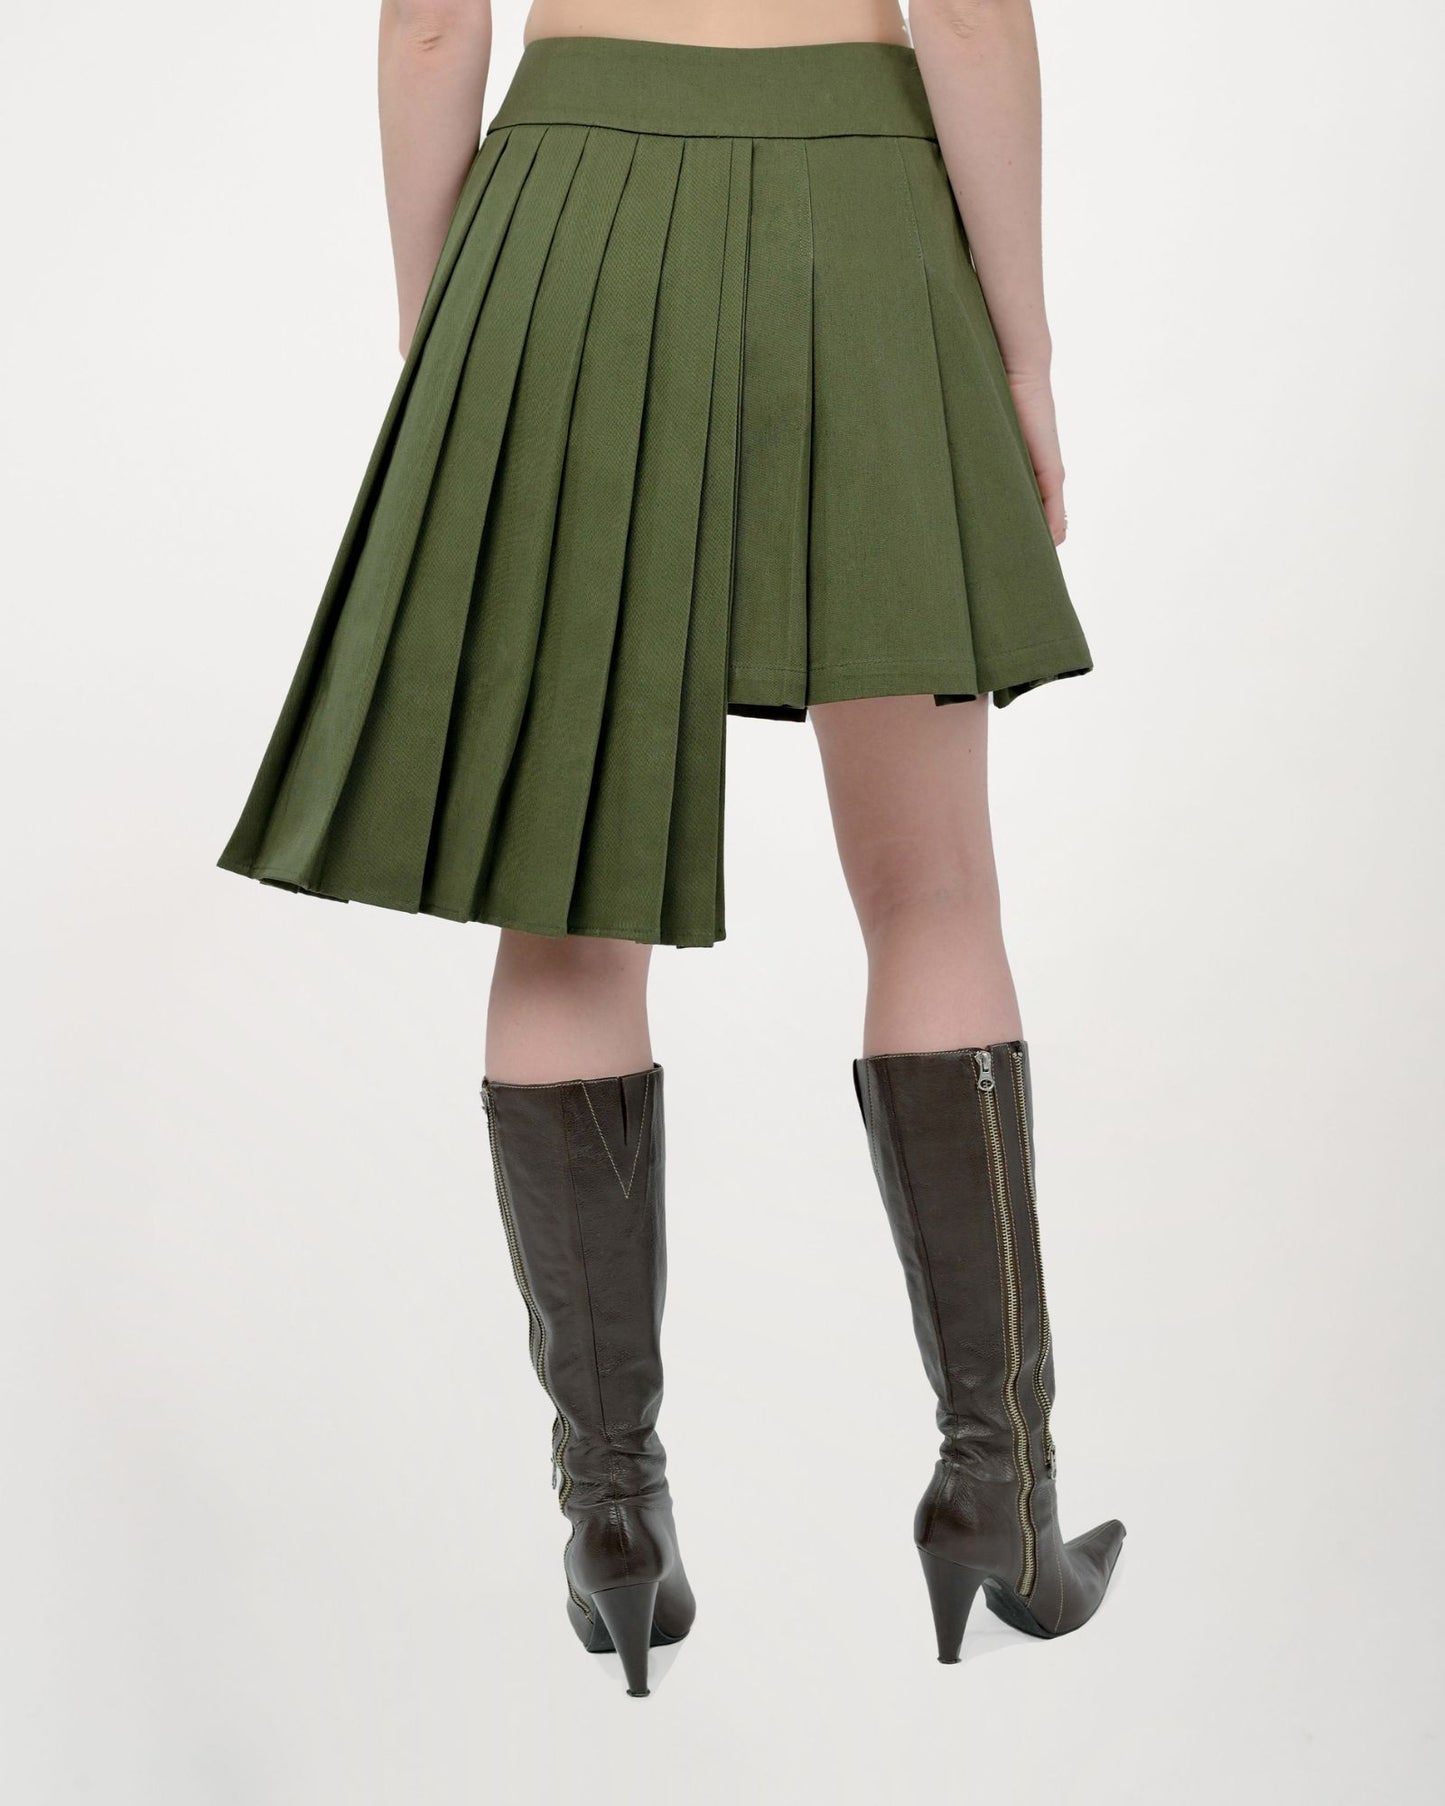 Asha Pleated Layered Skirt by Aseye Studio in Military Olive Green